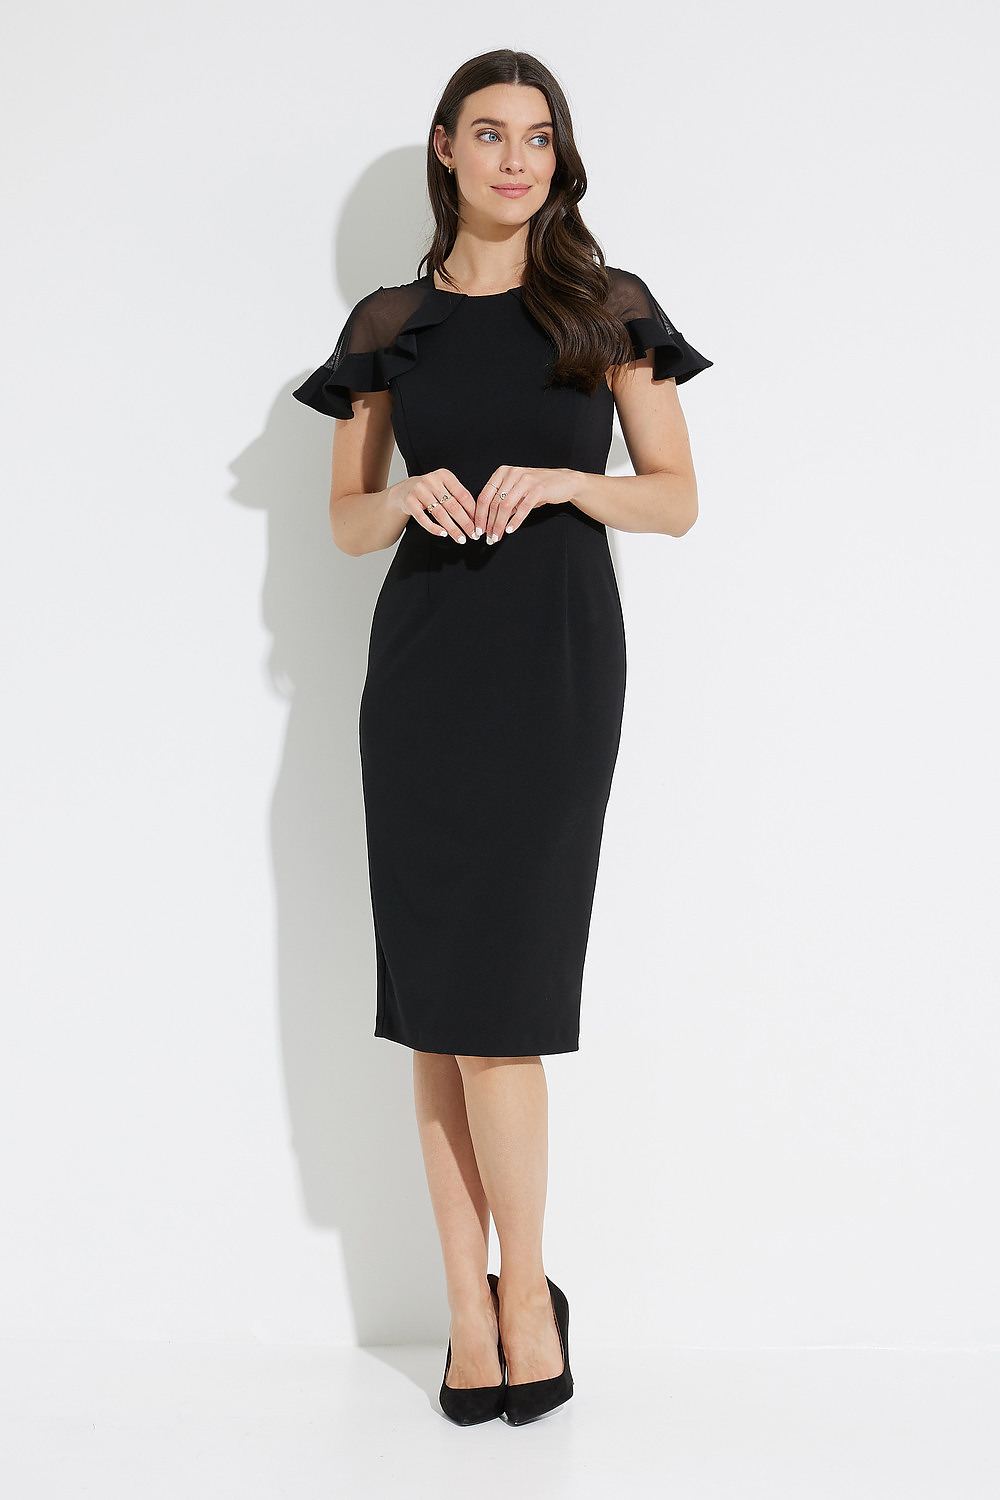 Joseph Ribkoff Sheer Shoulder Dress Style 223744. Black